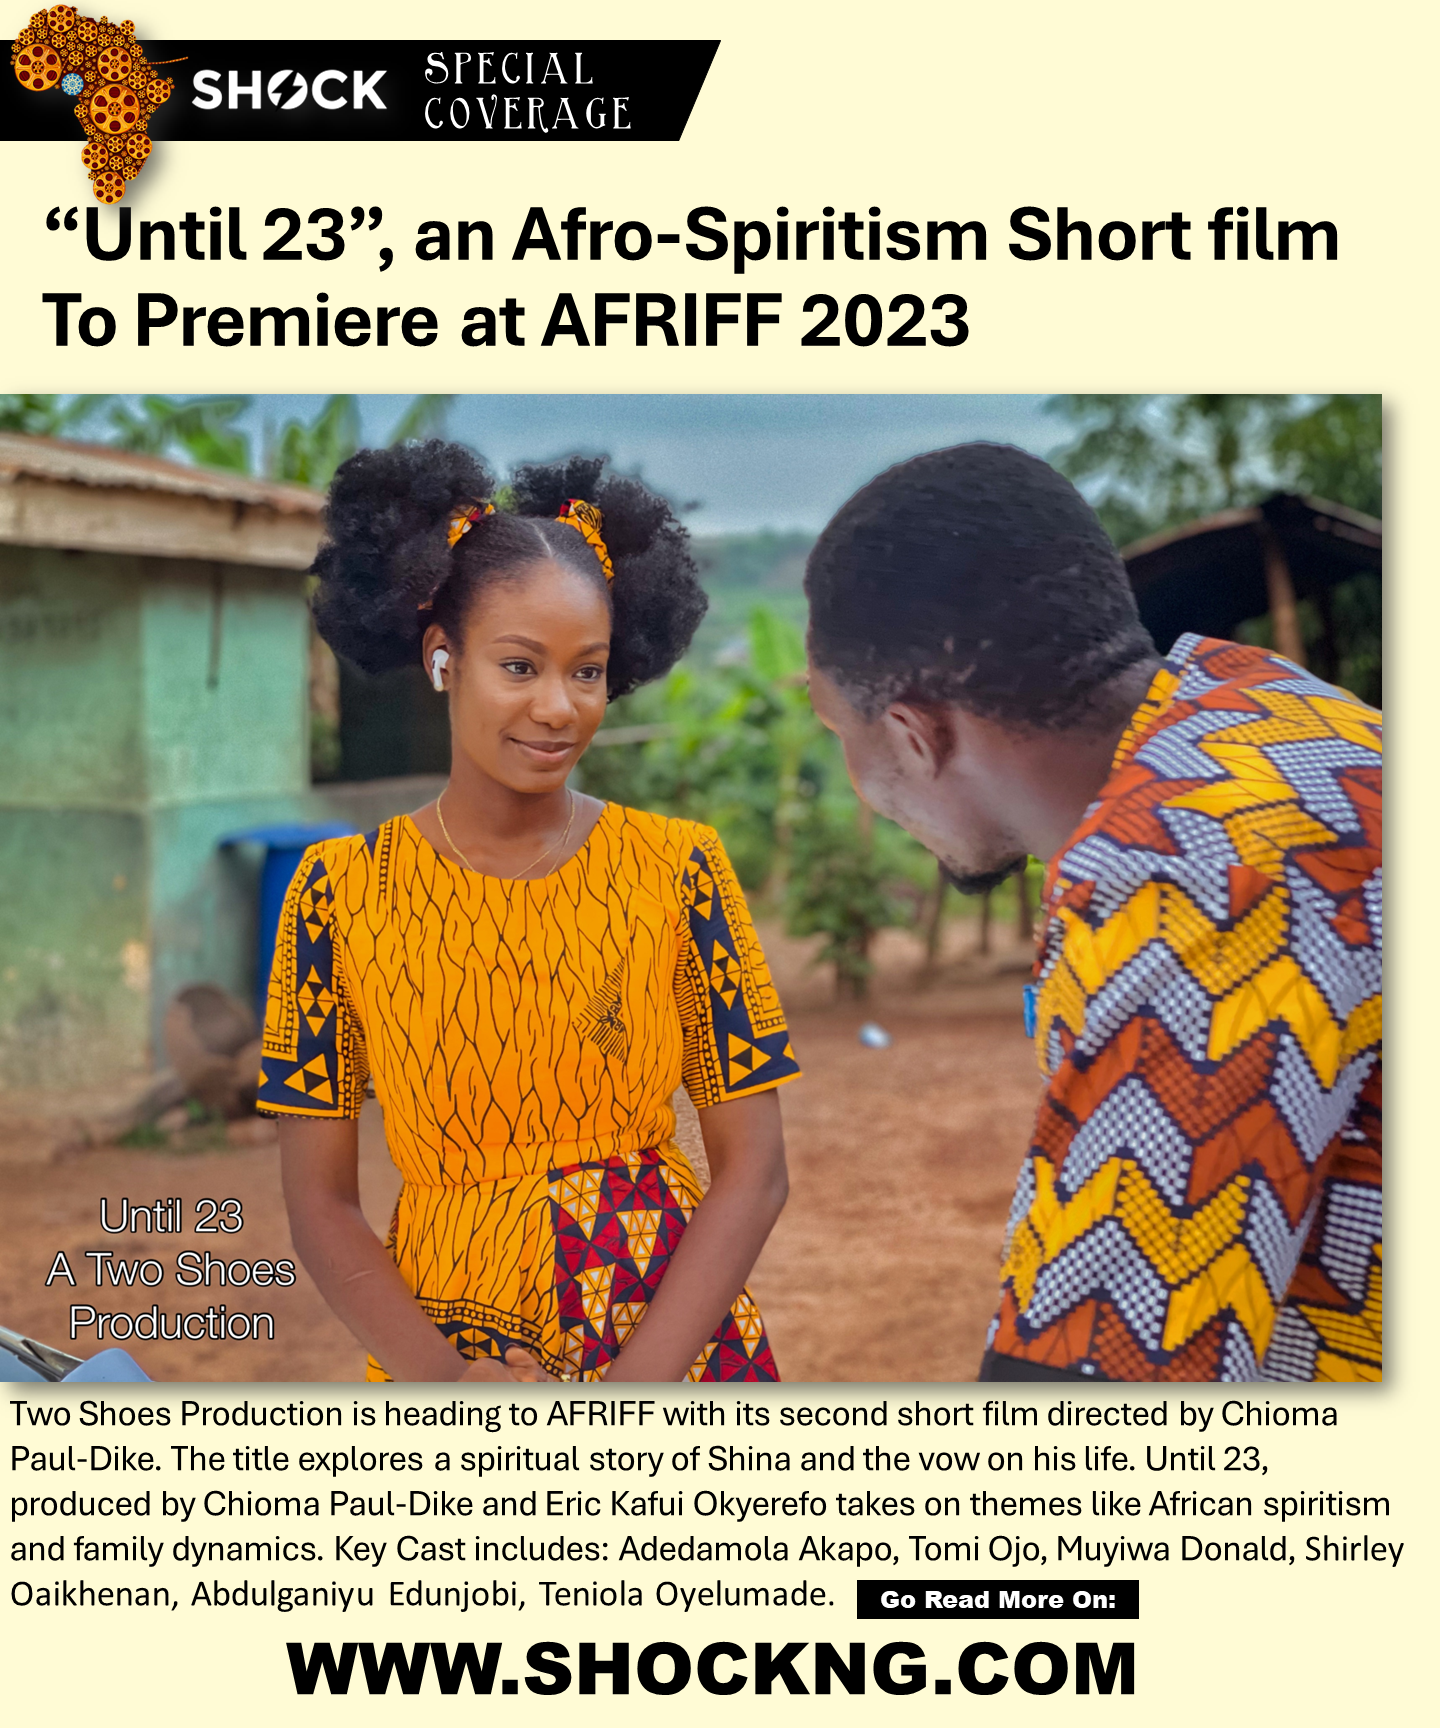 Until 23 afriff 2023 - "Until 23", an Afro-Spiritism Shortfilm to Debut at AFRIFF 2023